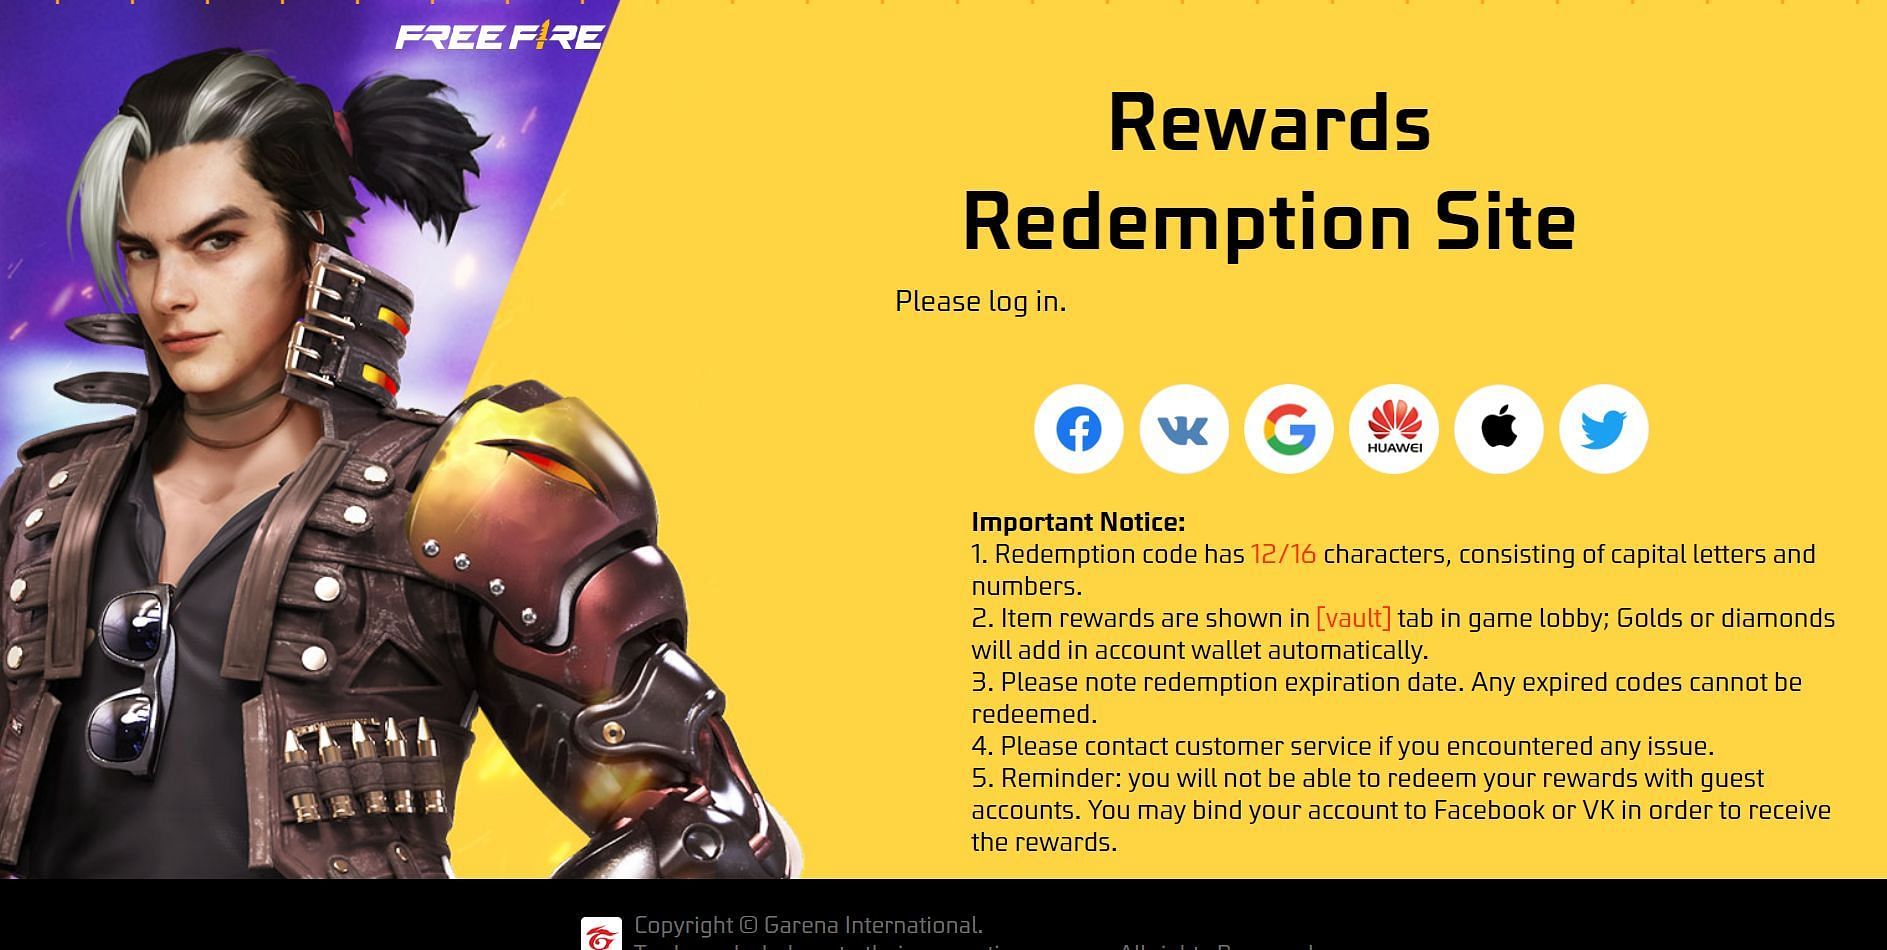 Six distinct login options are offered on the Rewards Redemption Site (Image via Garena)